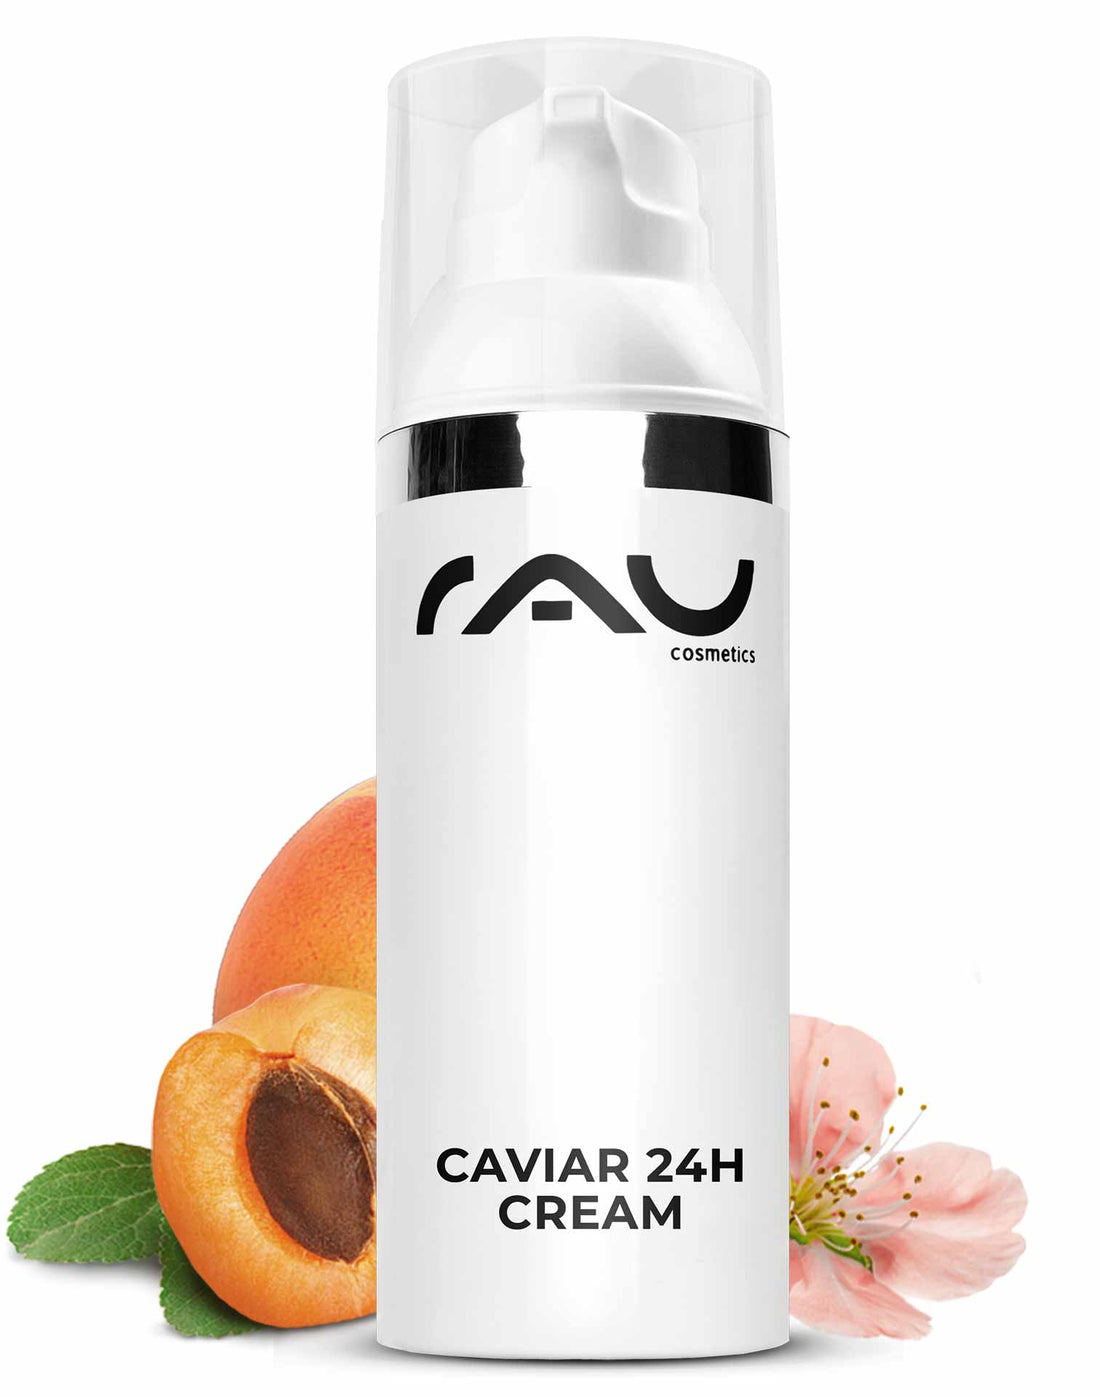 Caviar 24h Cream